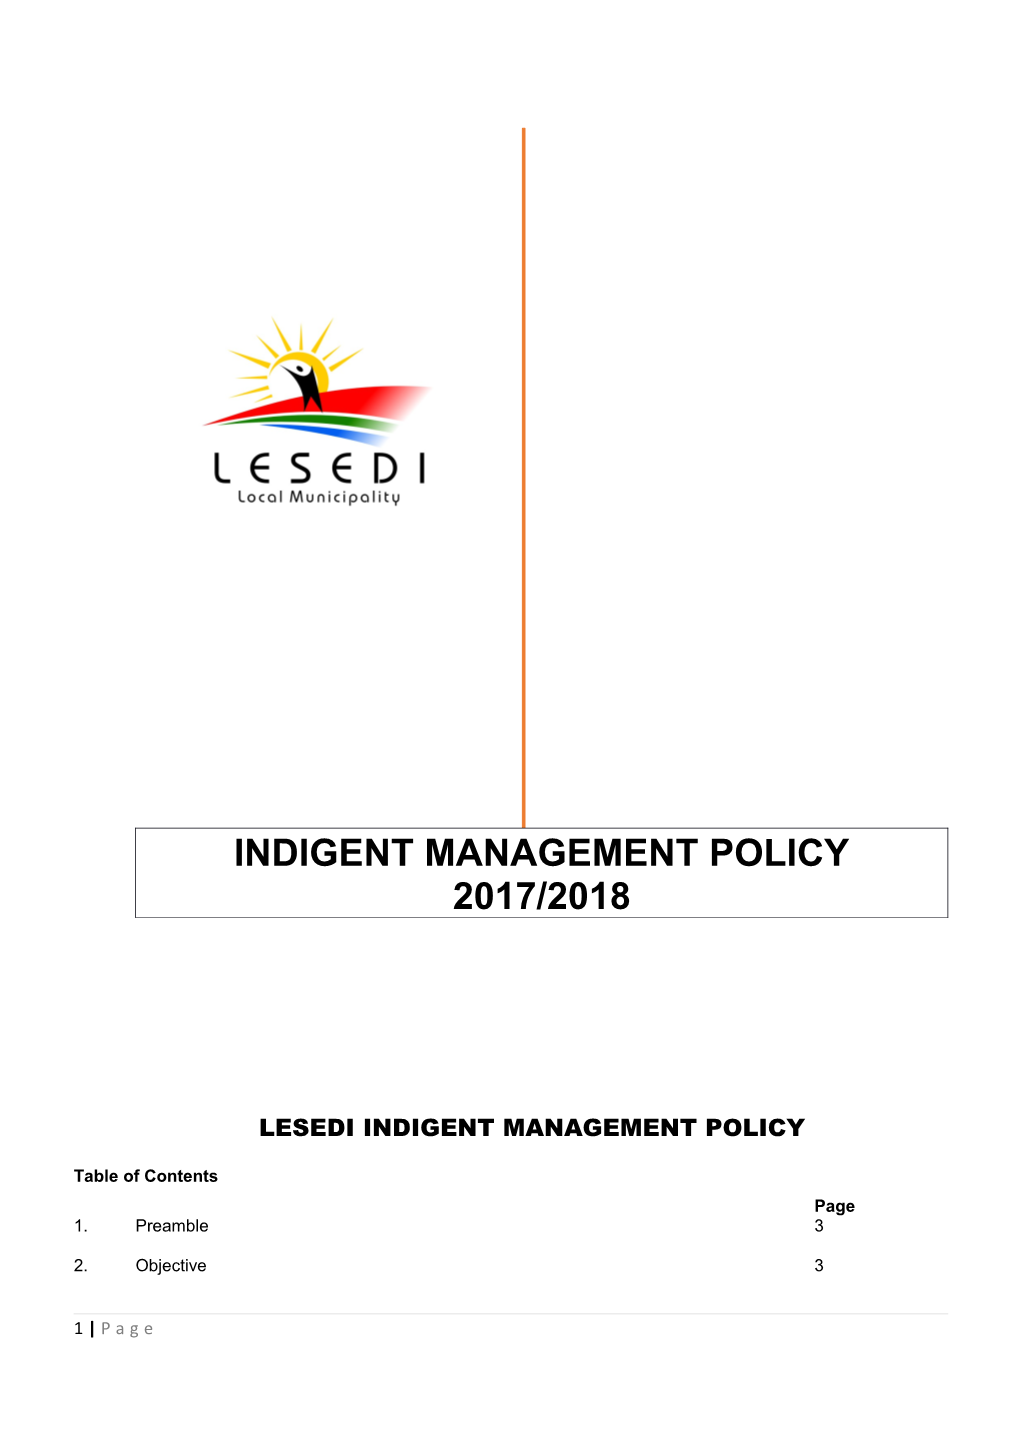 Lesedi Indigent Management Policy